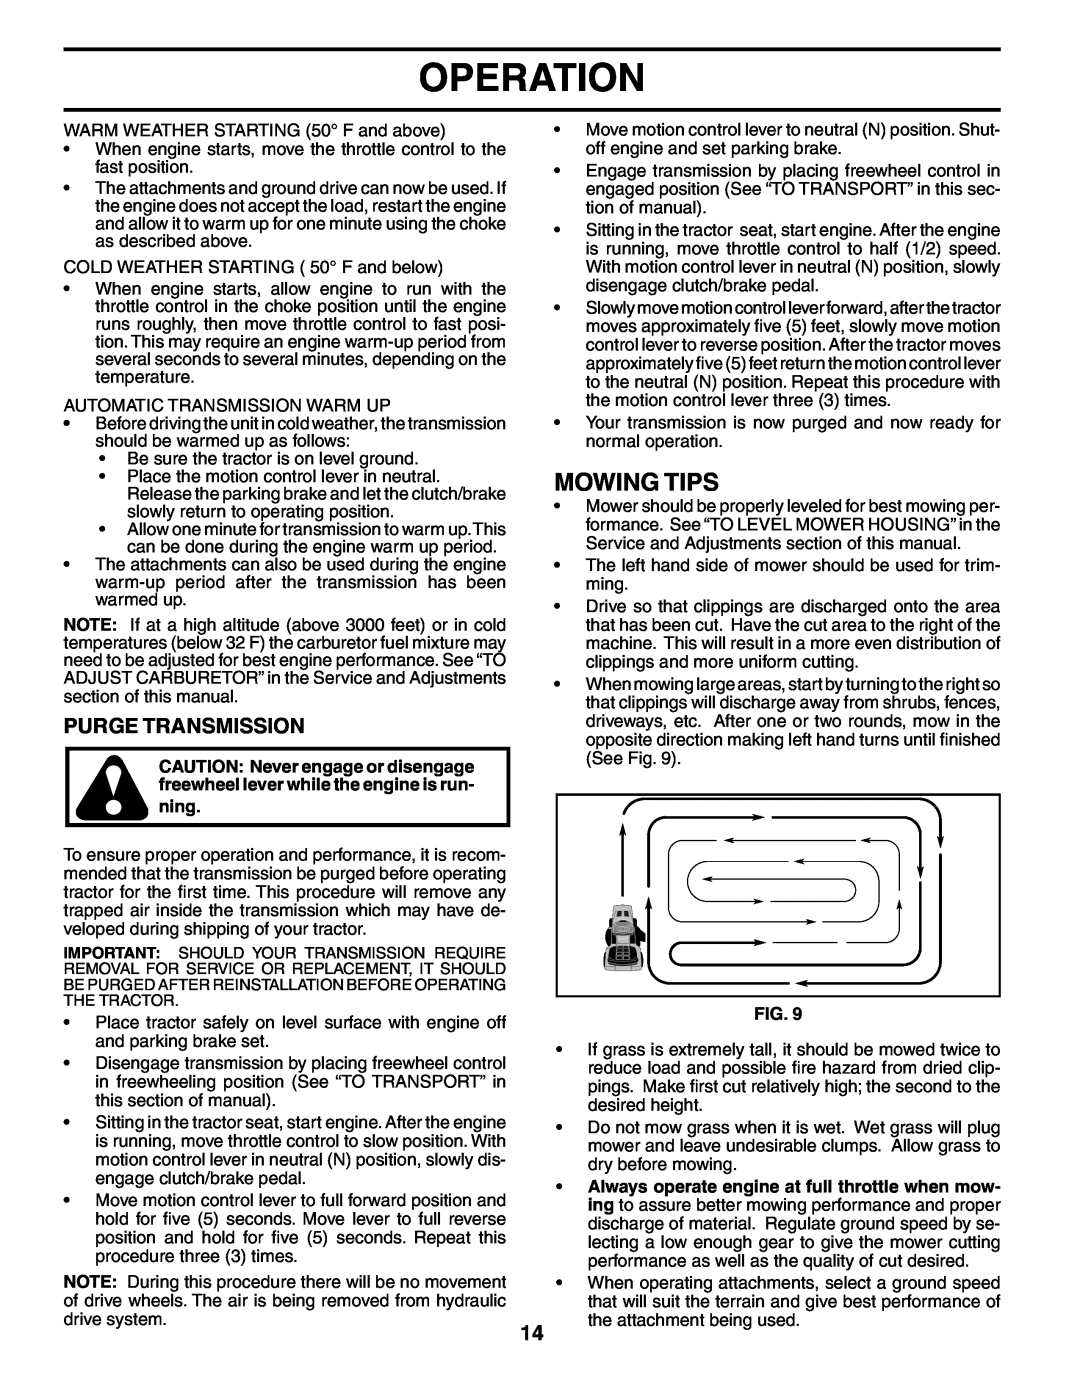 Poulan 195018 manual Mowing Tips, Purge Transmission, Operation 